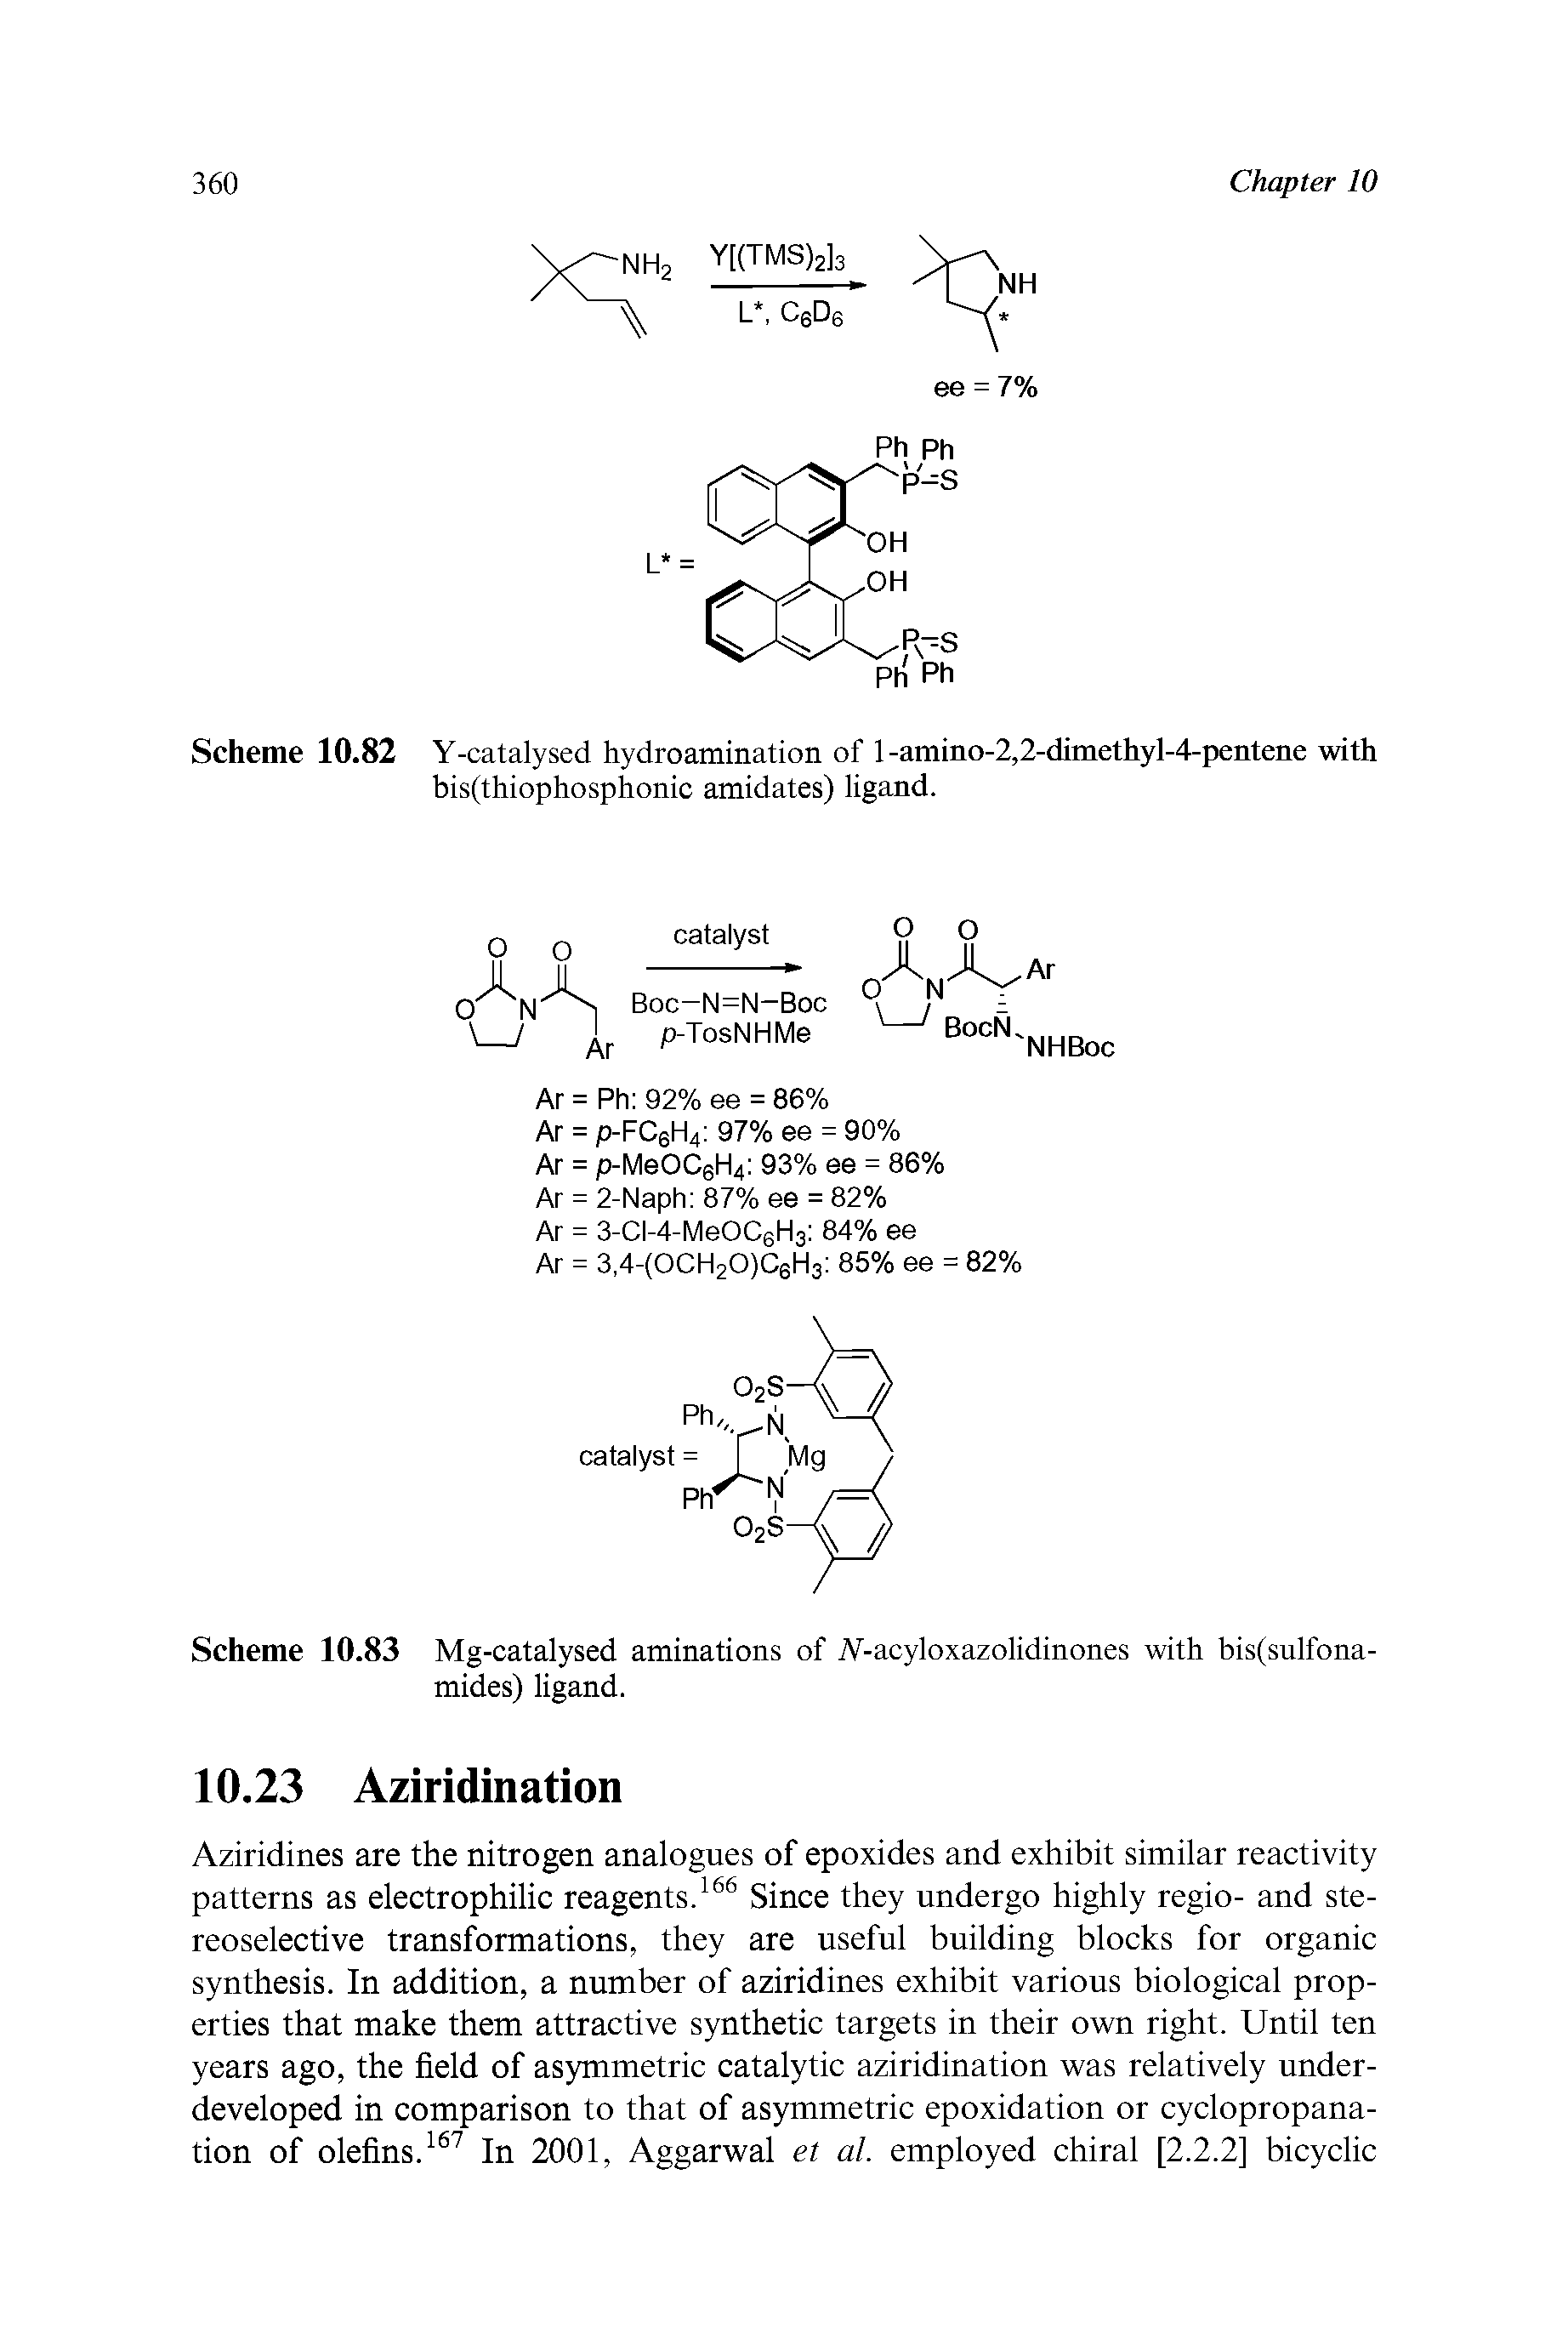 Scheme 10.82 Y-catalysed hydroamination of 1-amino-2,2-dimethyl-4-pentene with bis(thiophosphonic amidates) ligand.